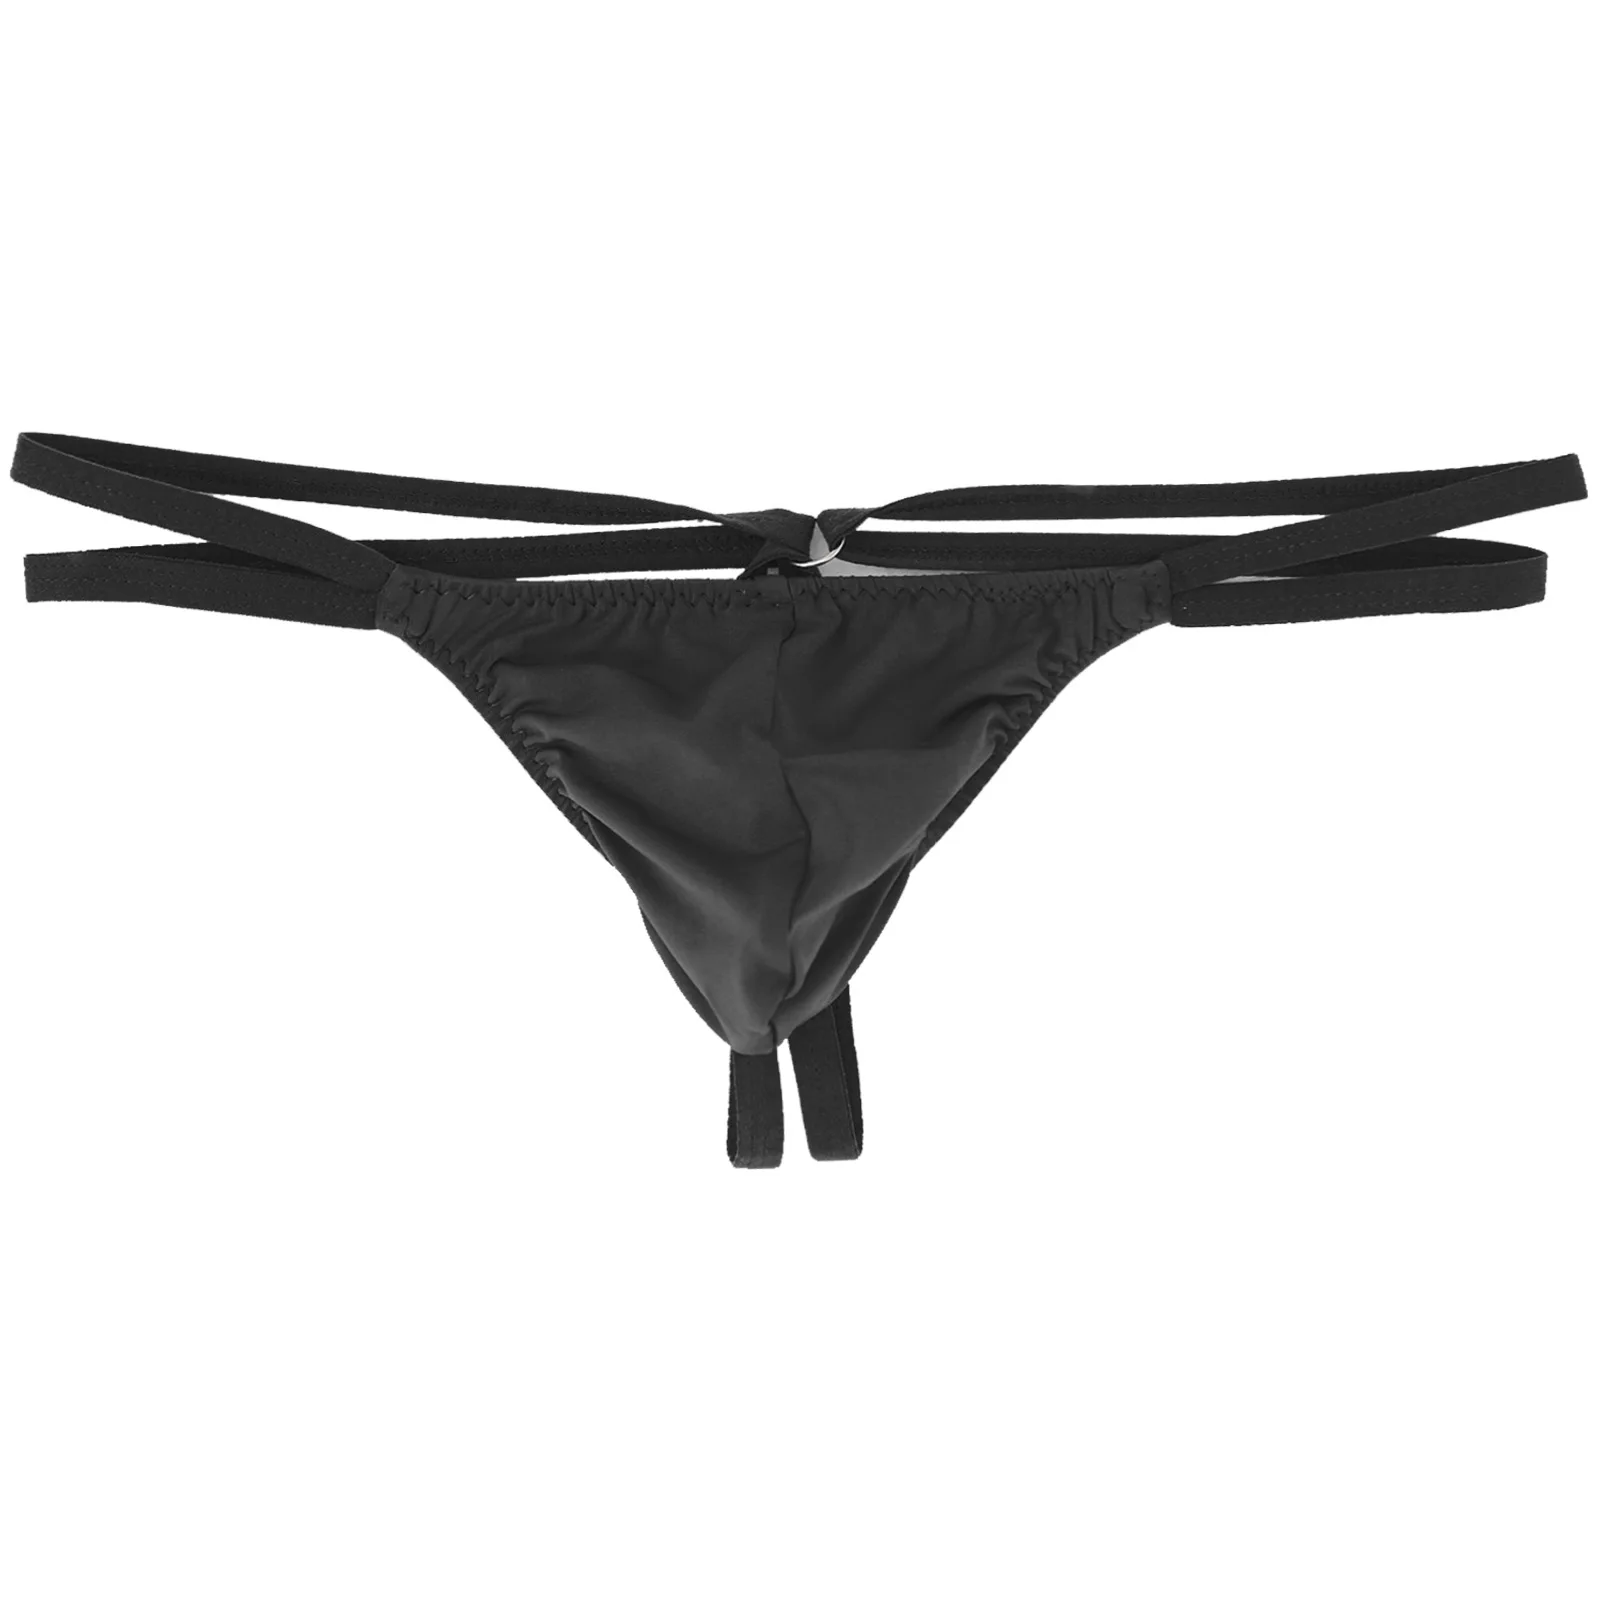 Men Underwear Briefs Low Waist Bulge Pouch G-string Thongs Male Underpants Elastic Waistband T-back Briefs Lingerie Underwear briefs for men